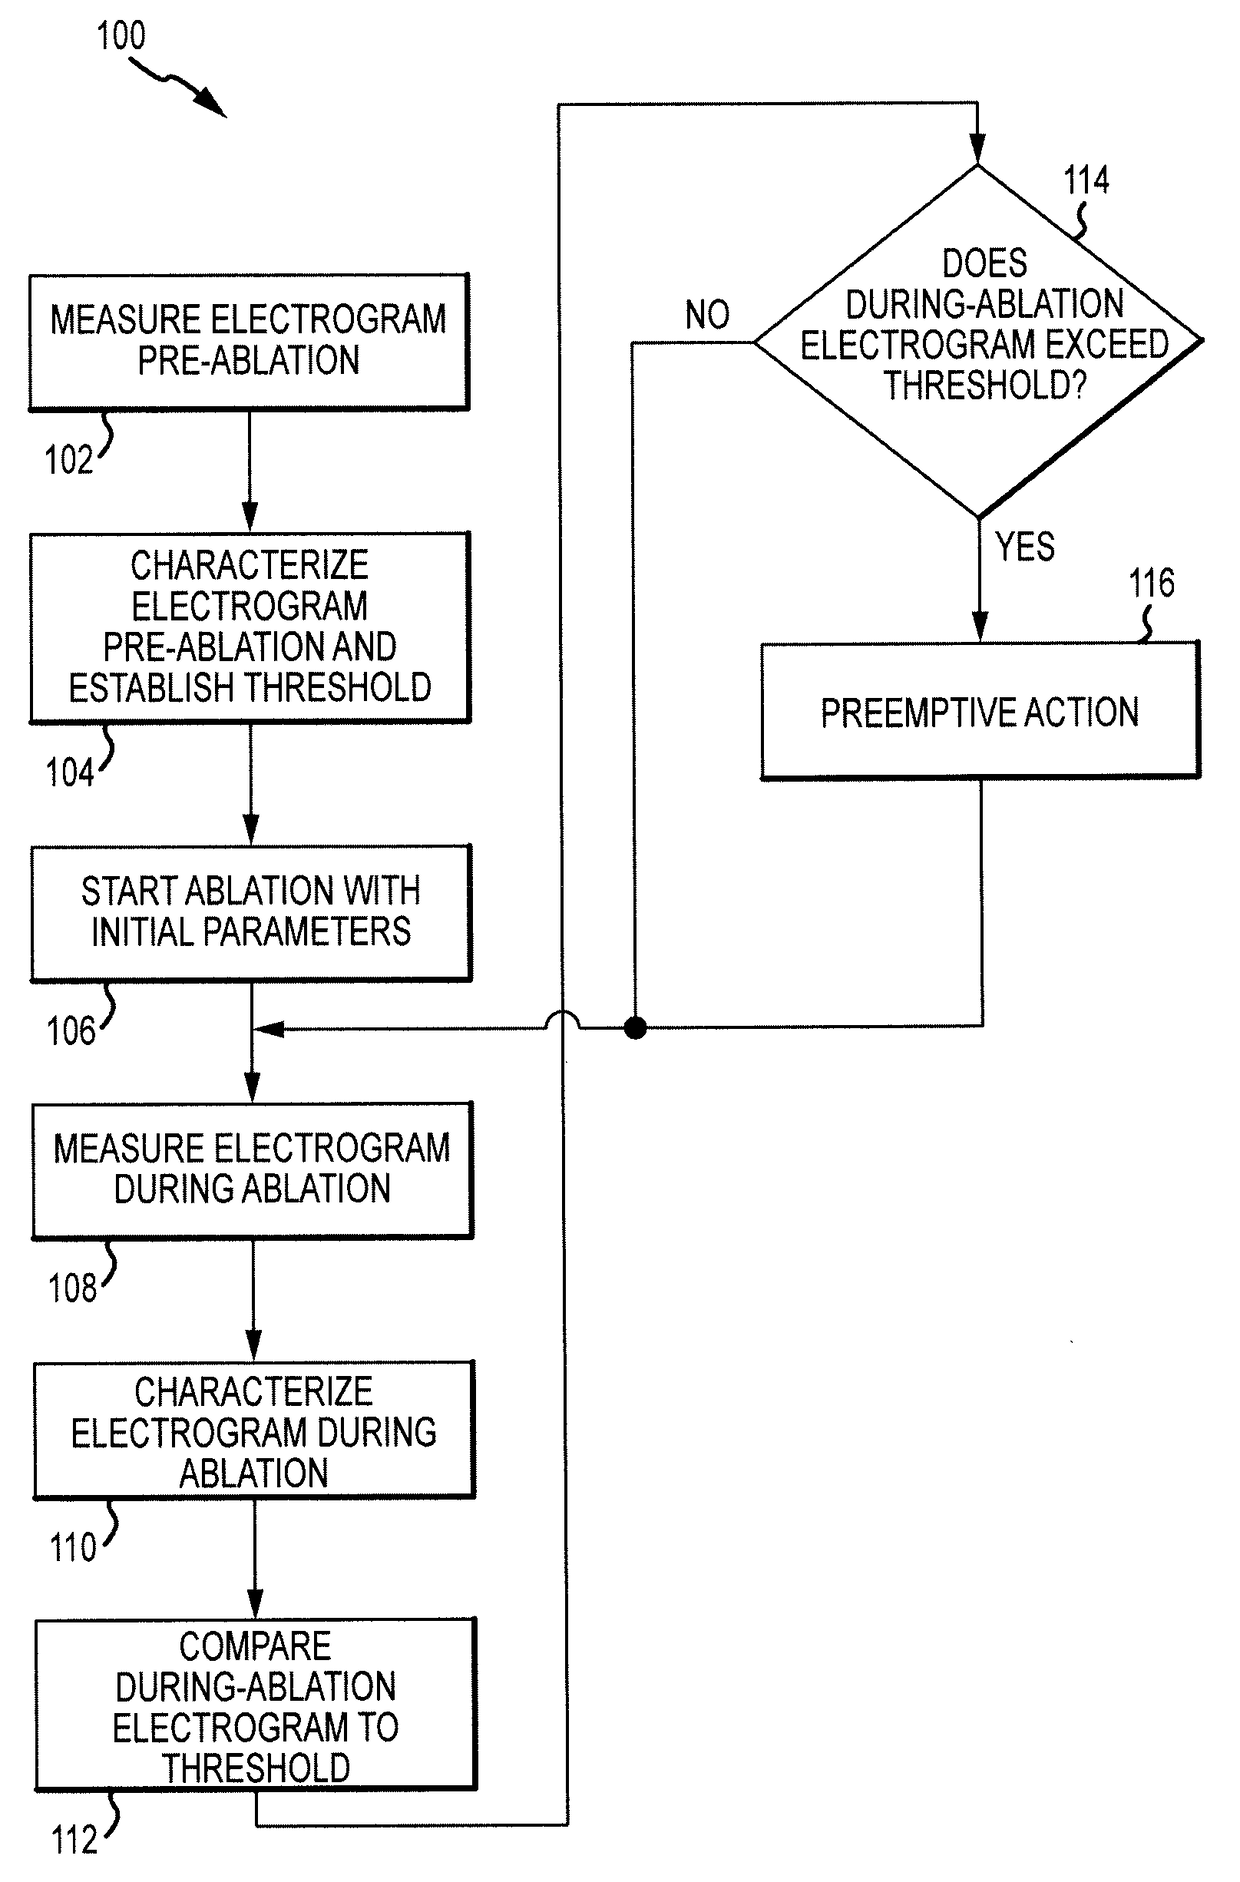 Electrogram-based ablation control